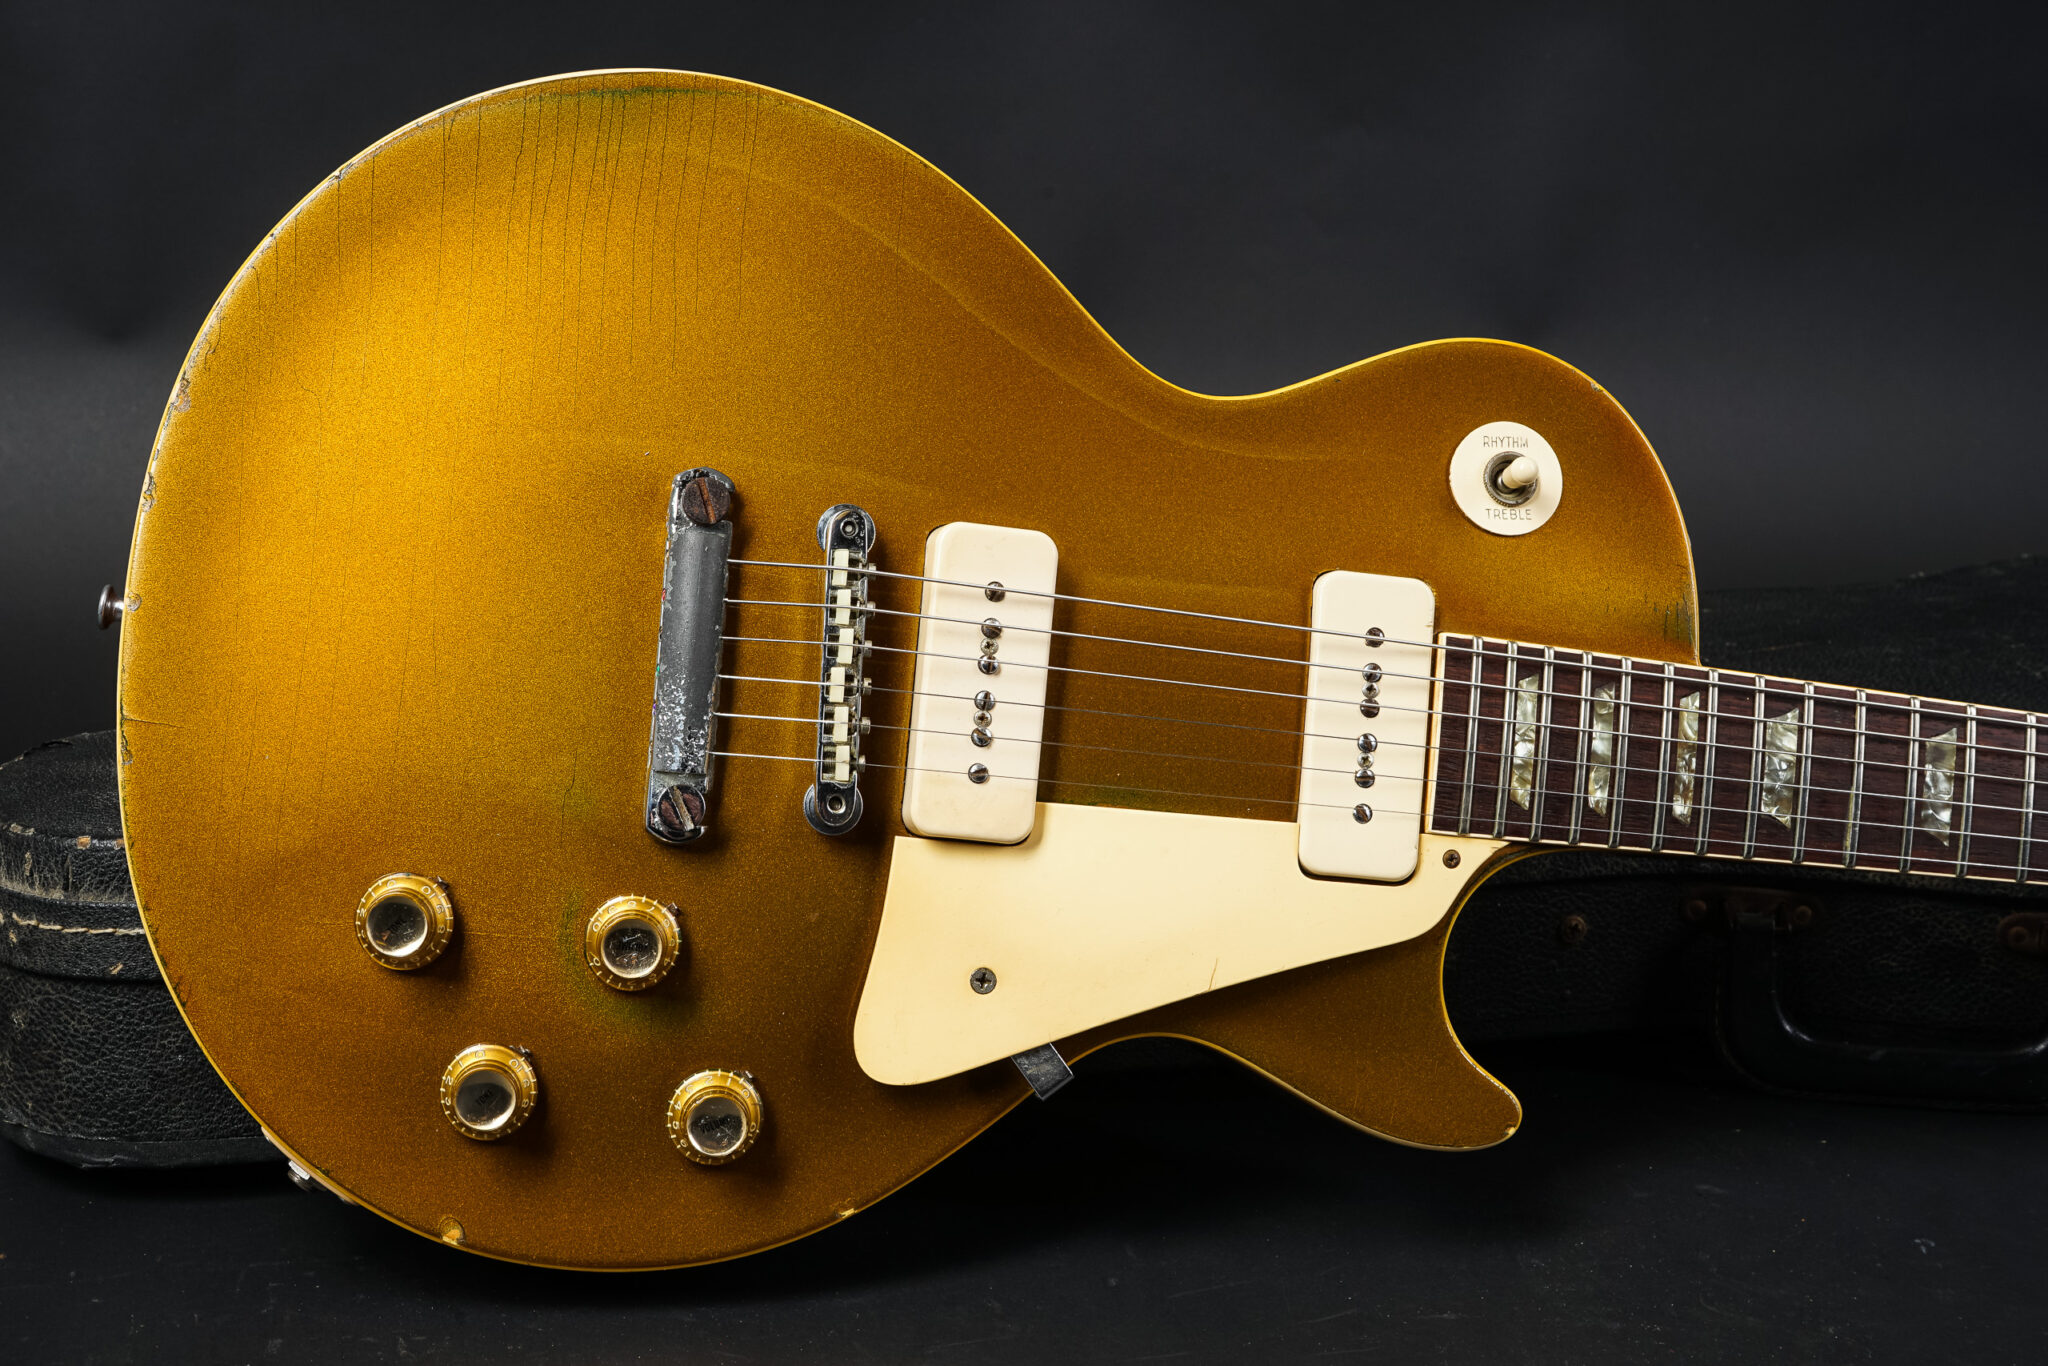 https://guitarpoint.de/app/uploads/products/1968-gibson-les-paul-standard-goldtop-3/1968-Gibson-Les.Paul-Standard-Goldtop-516469-9-2048x1366.jpg